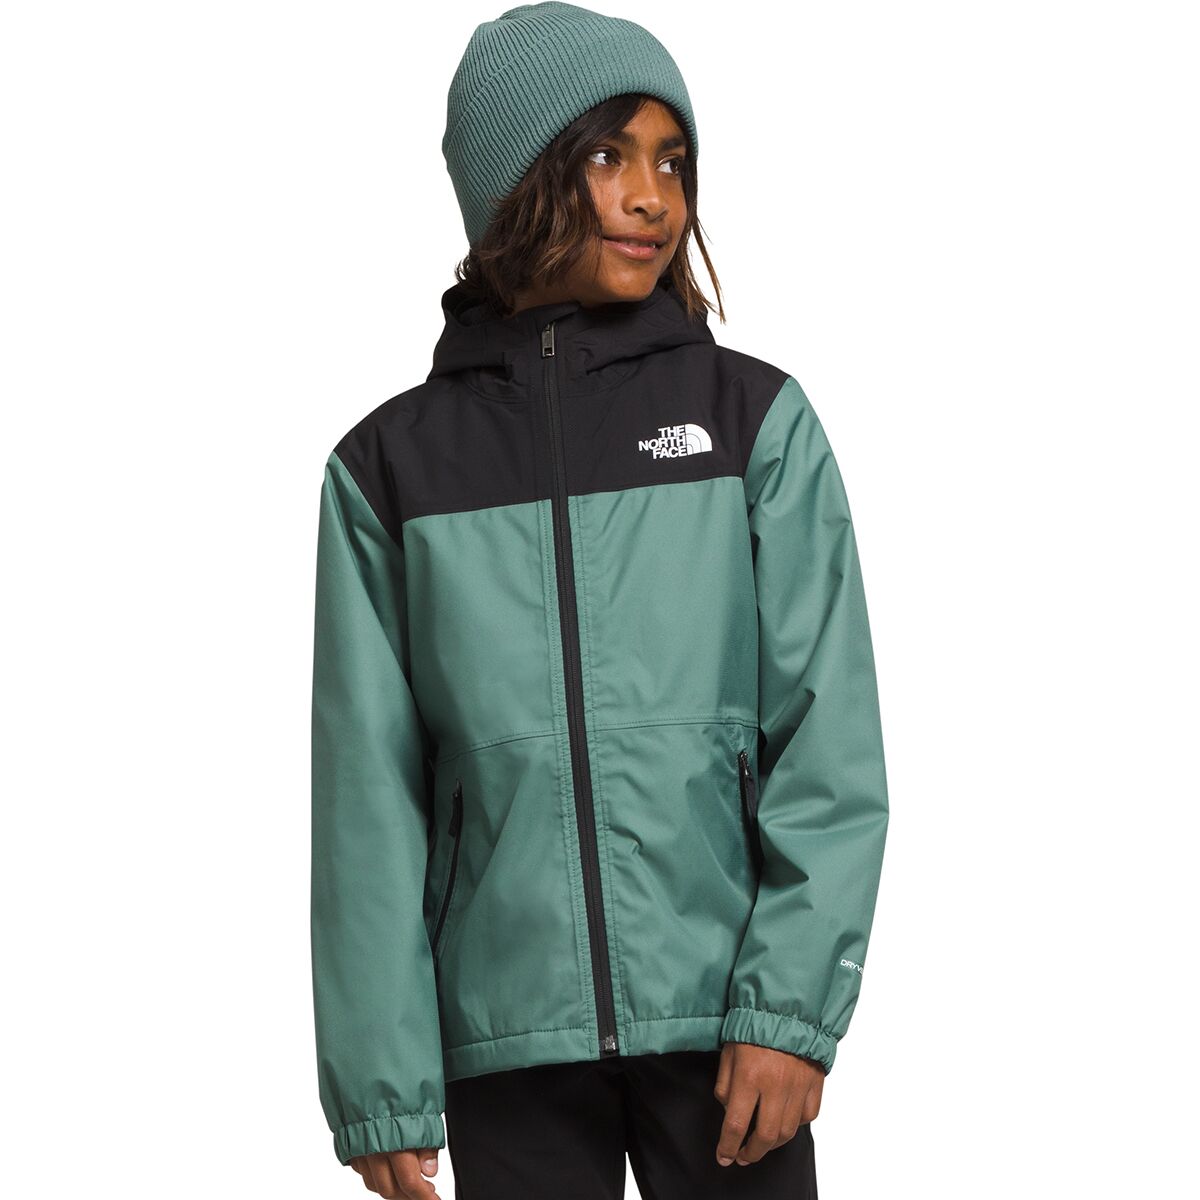 The North Face Warm Storm Rain Jacket - Winter Jacket Boys, Buy online